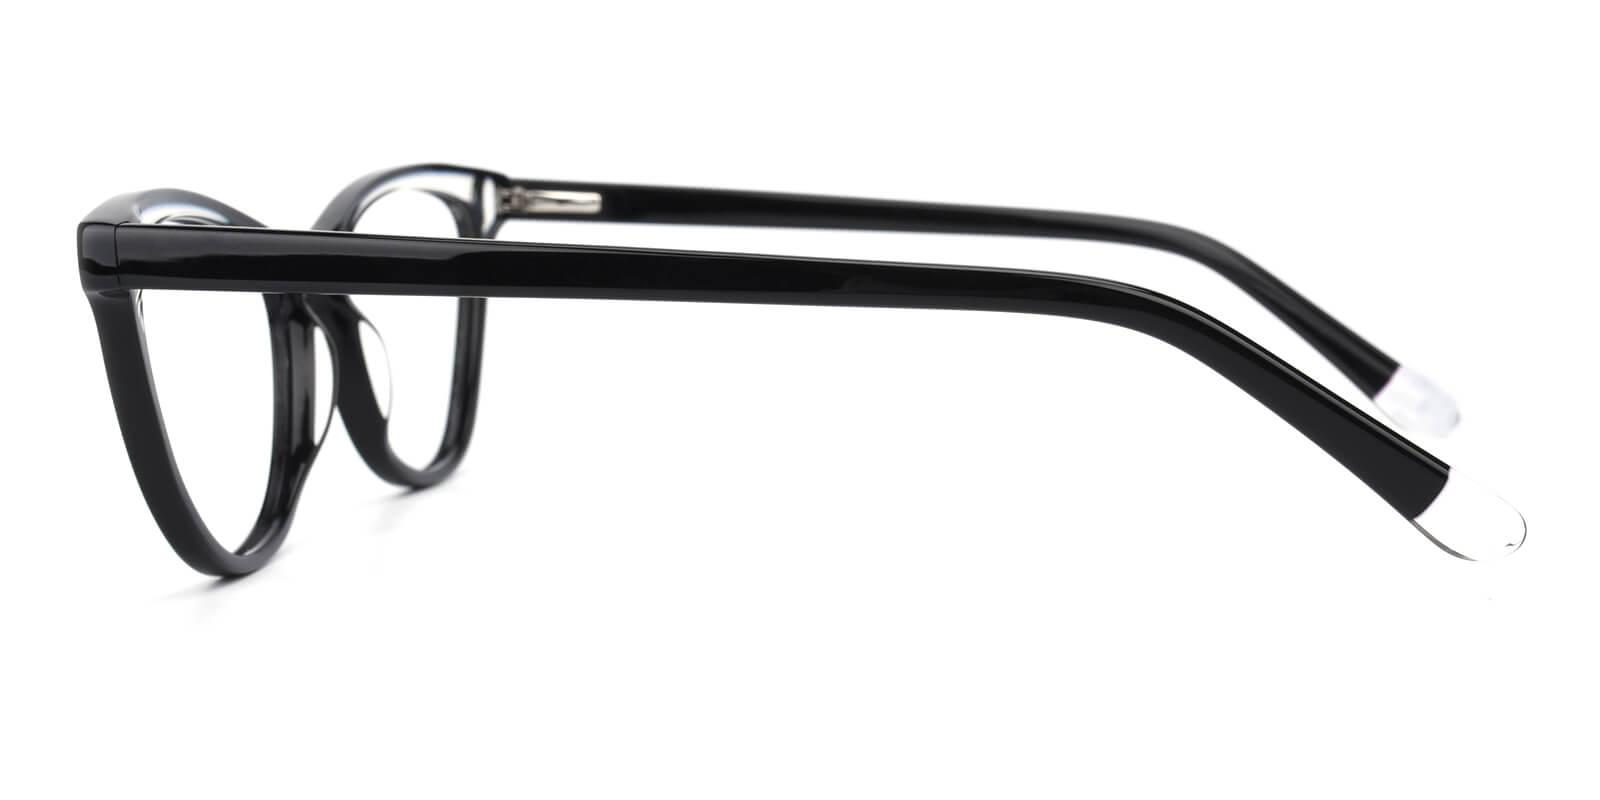 Florencer-Black-Cat-Acetate-Eyeglasses-detail